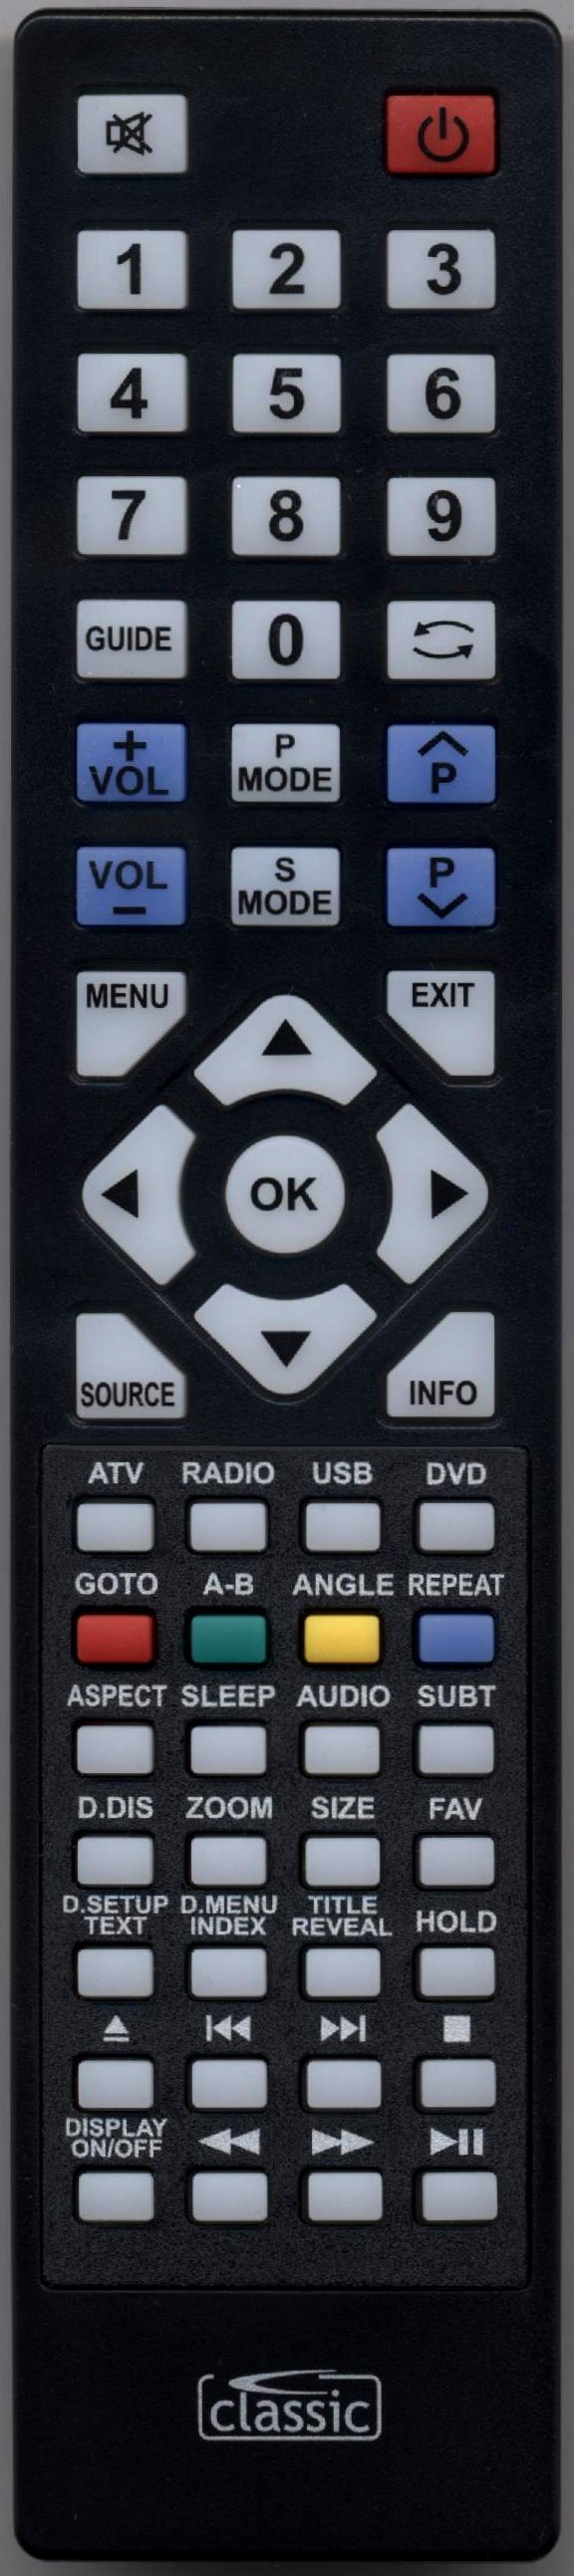 TECHNIKA 22-228G/WLCD/DVD Remote Control